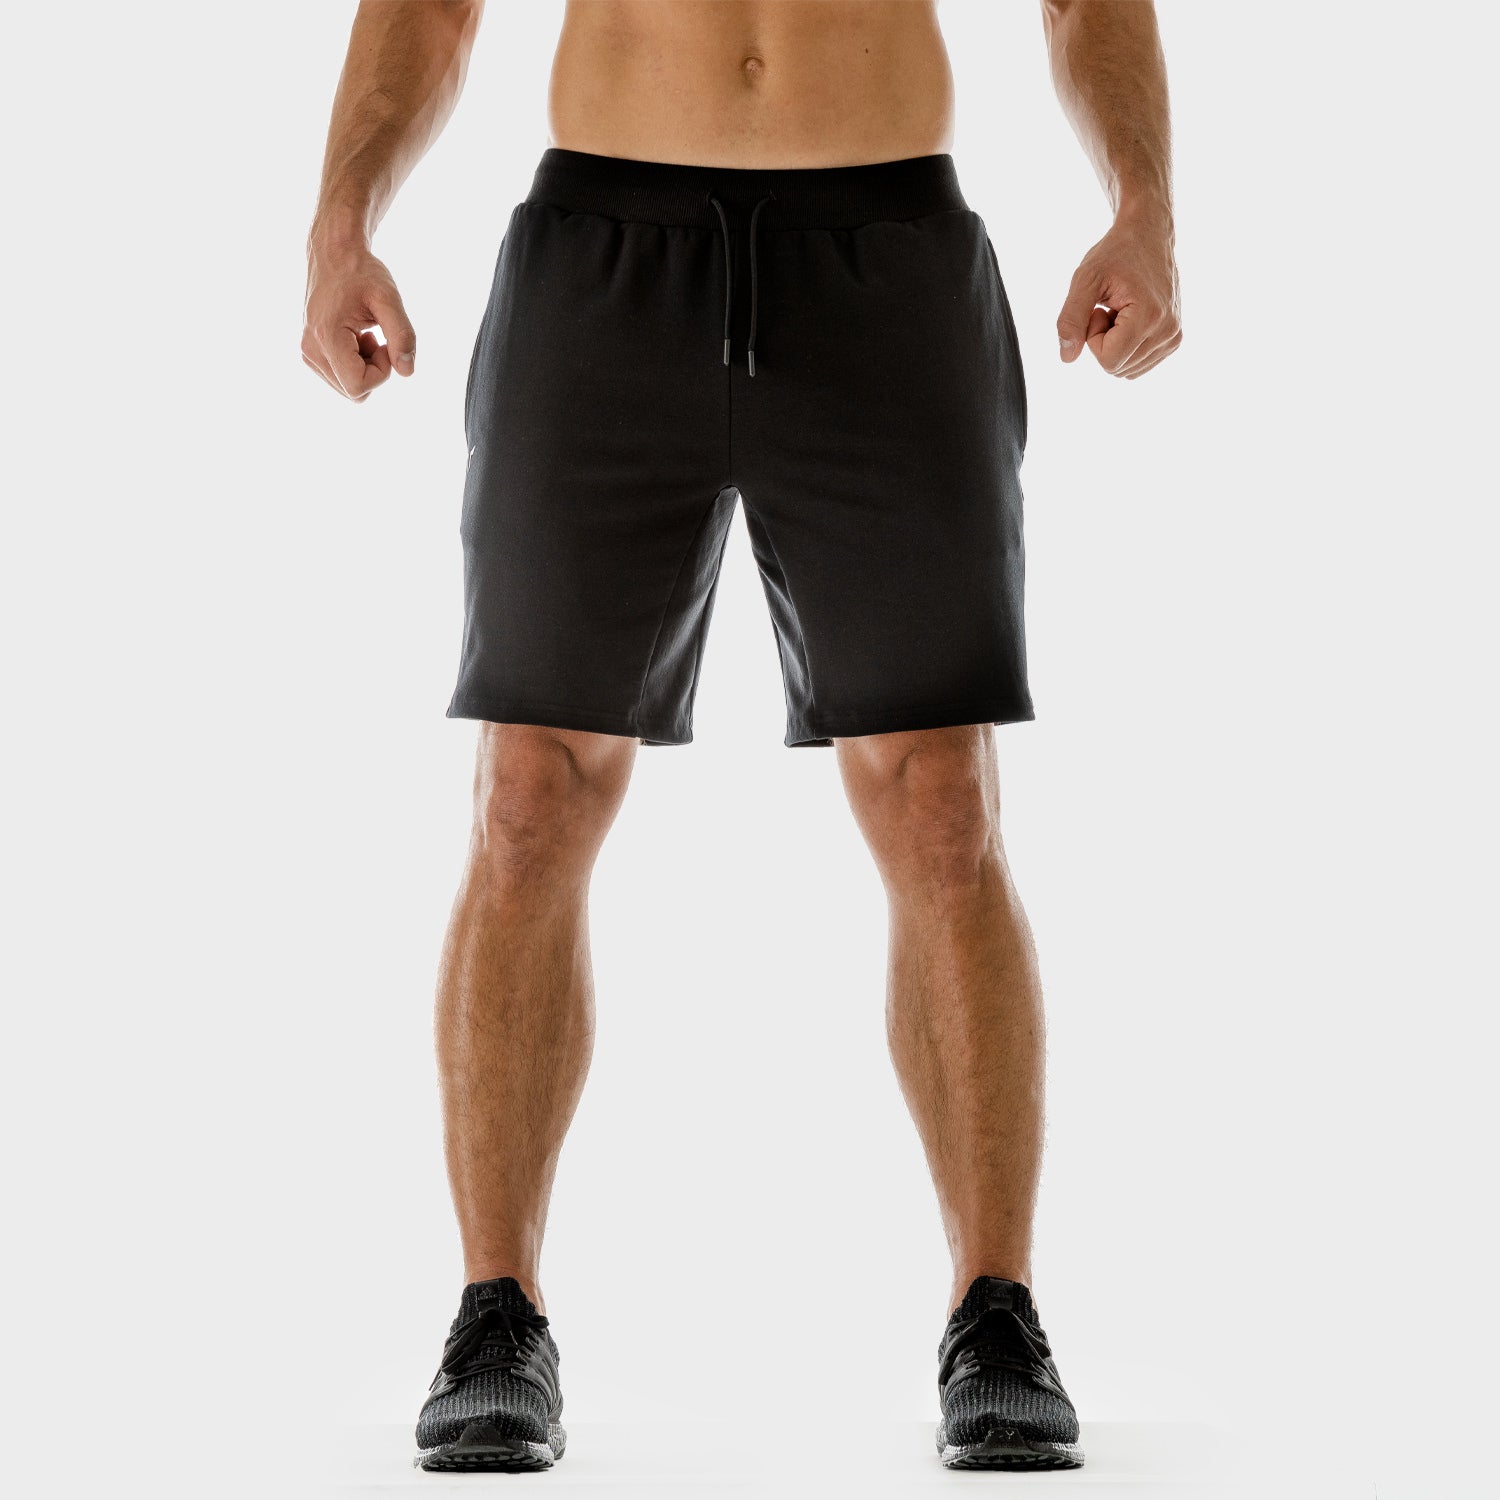 squatwolf-workout-short-for-men-lab-360-jogger-shorts-black-gym-wear